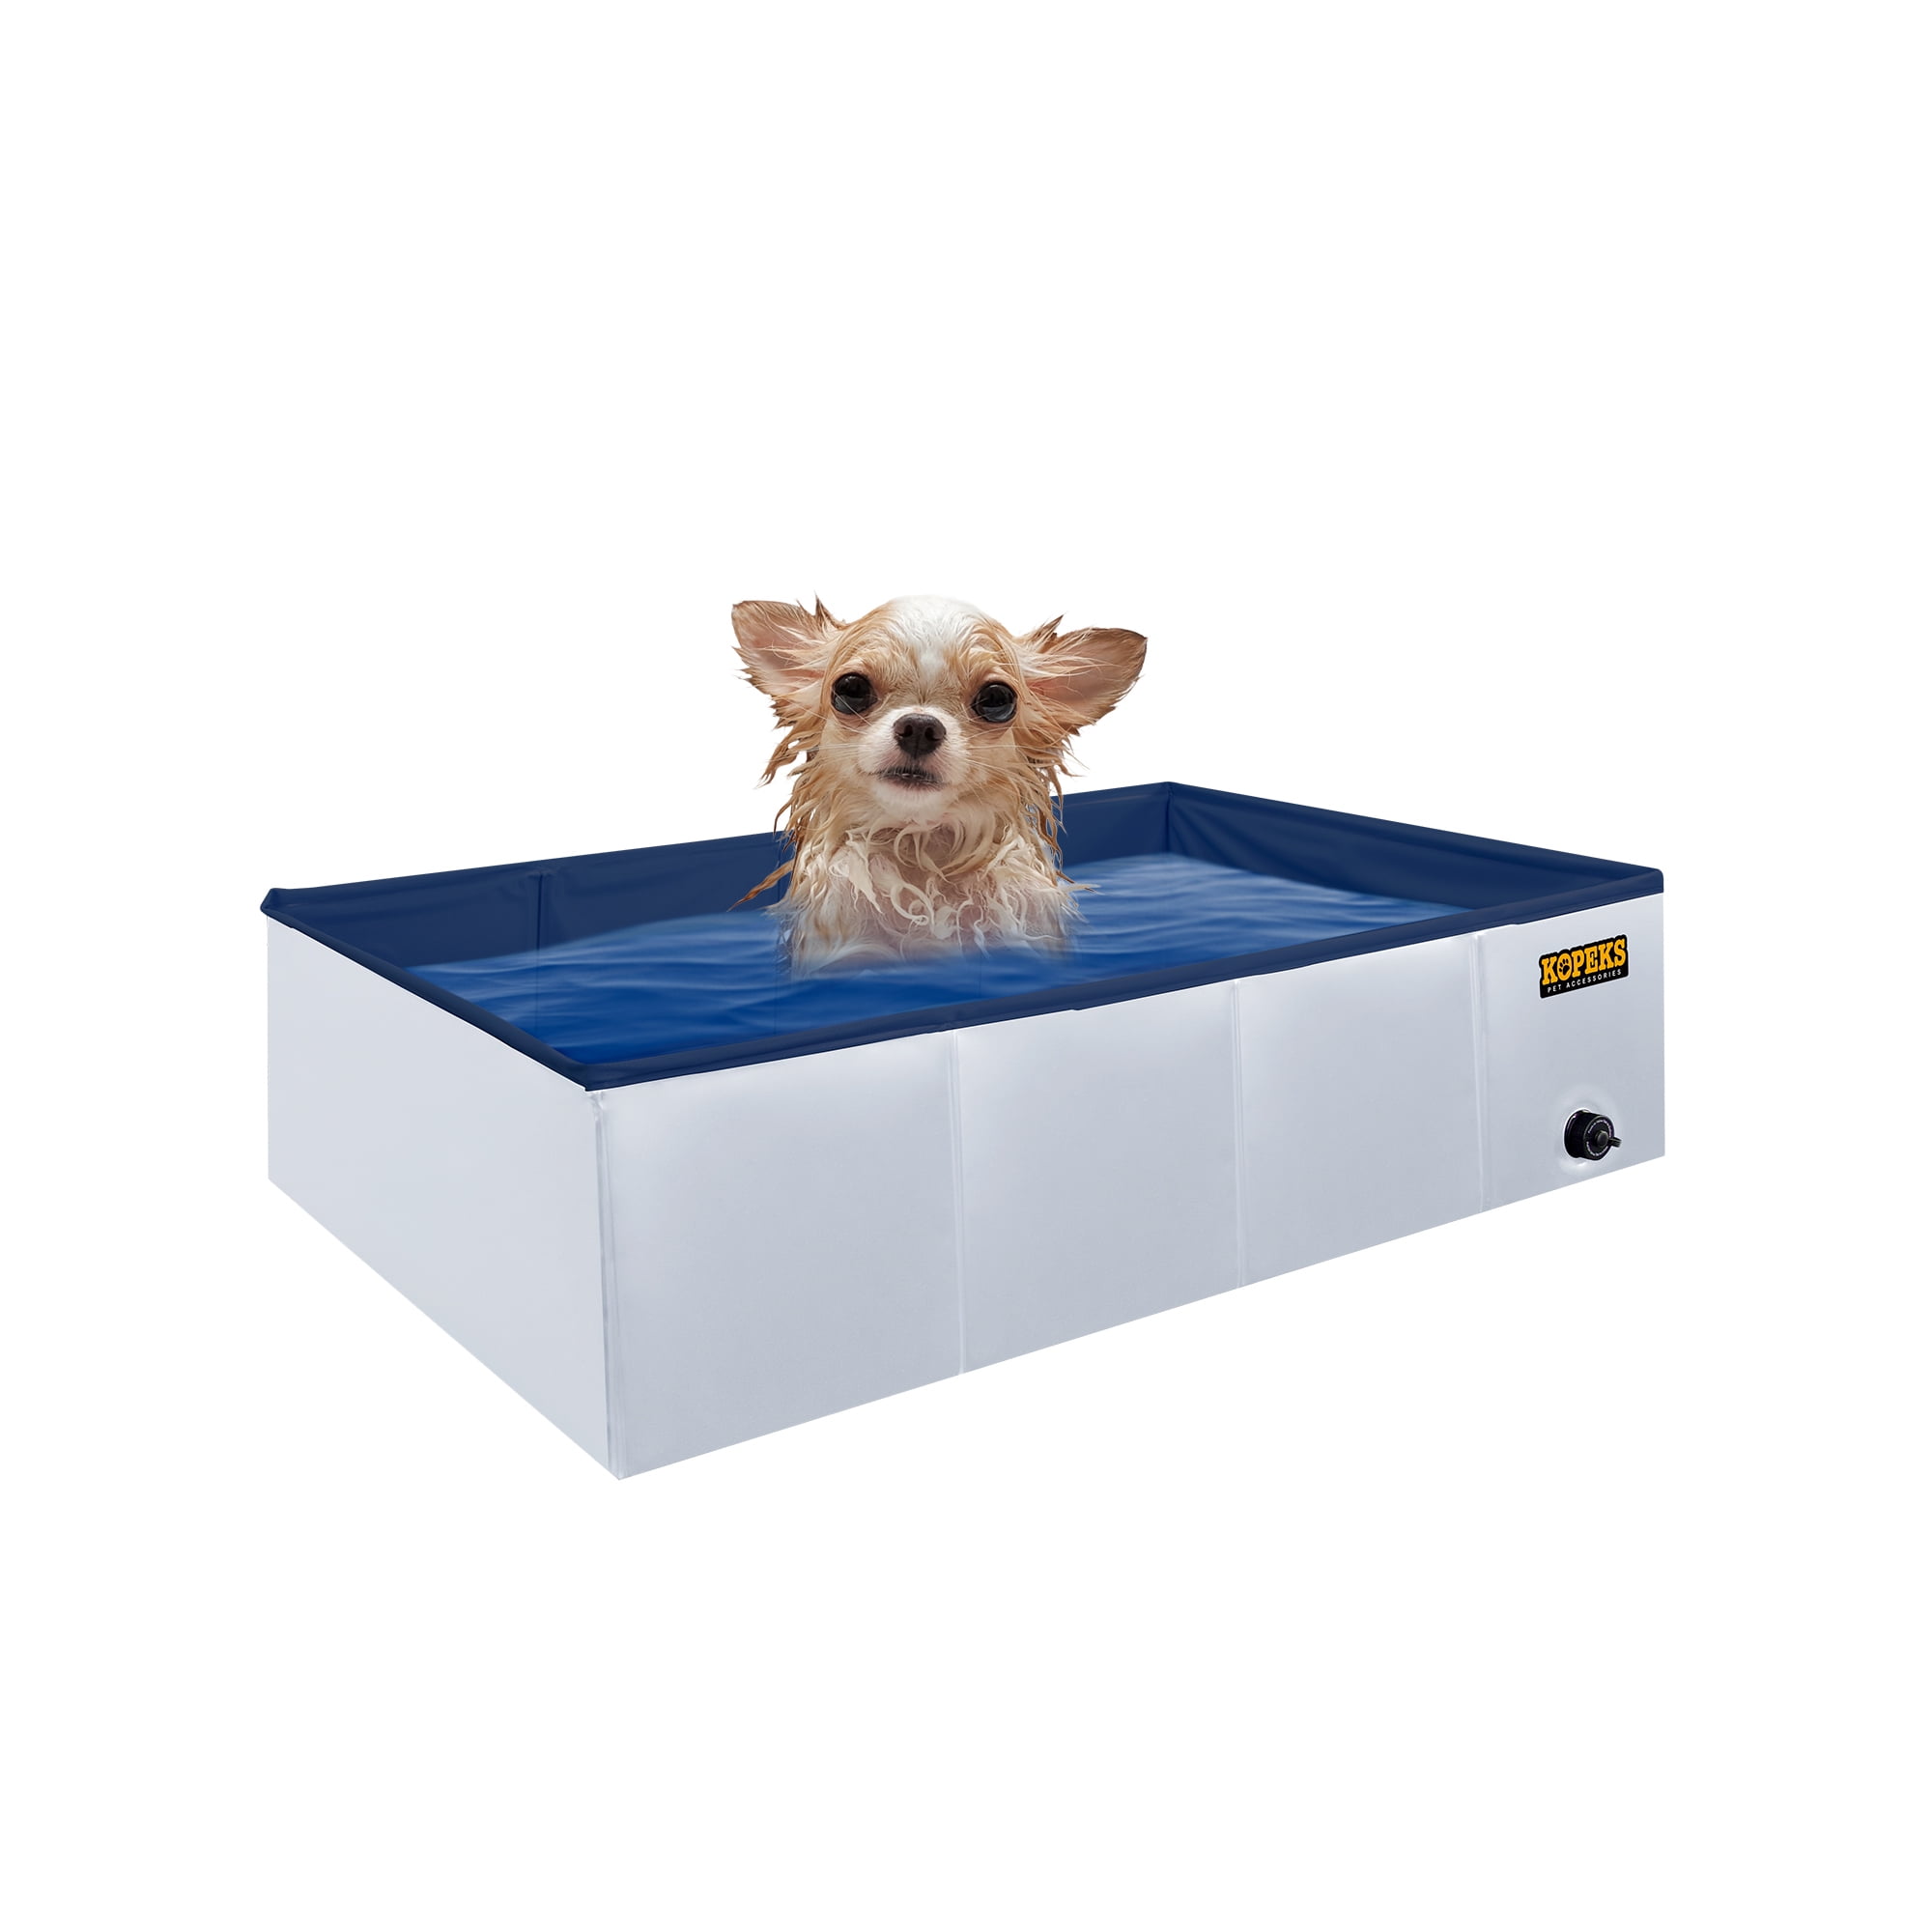 Forever Speed Dog Pool Foldable Pet Pool Portable Swimming Pool Padding Pool Bathing Tub in Safty PVC120X30CM Blue